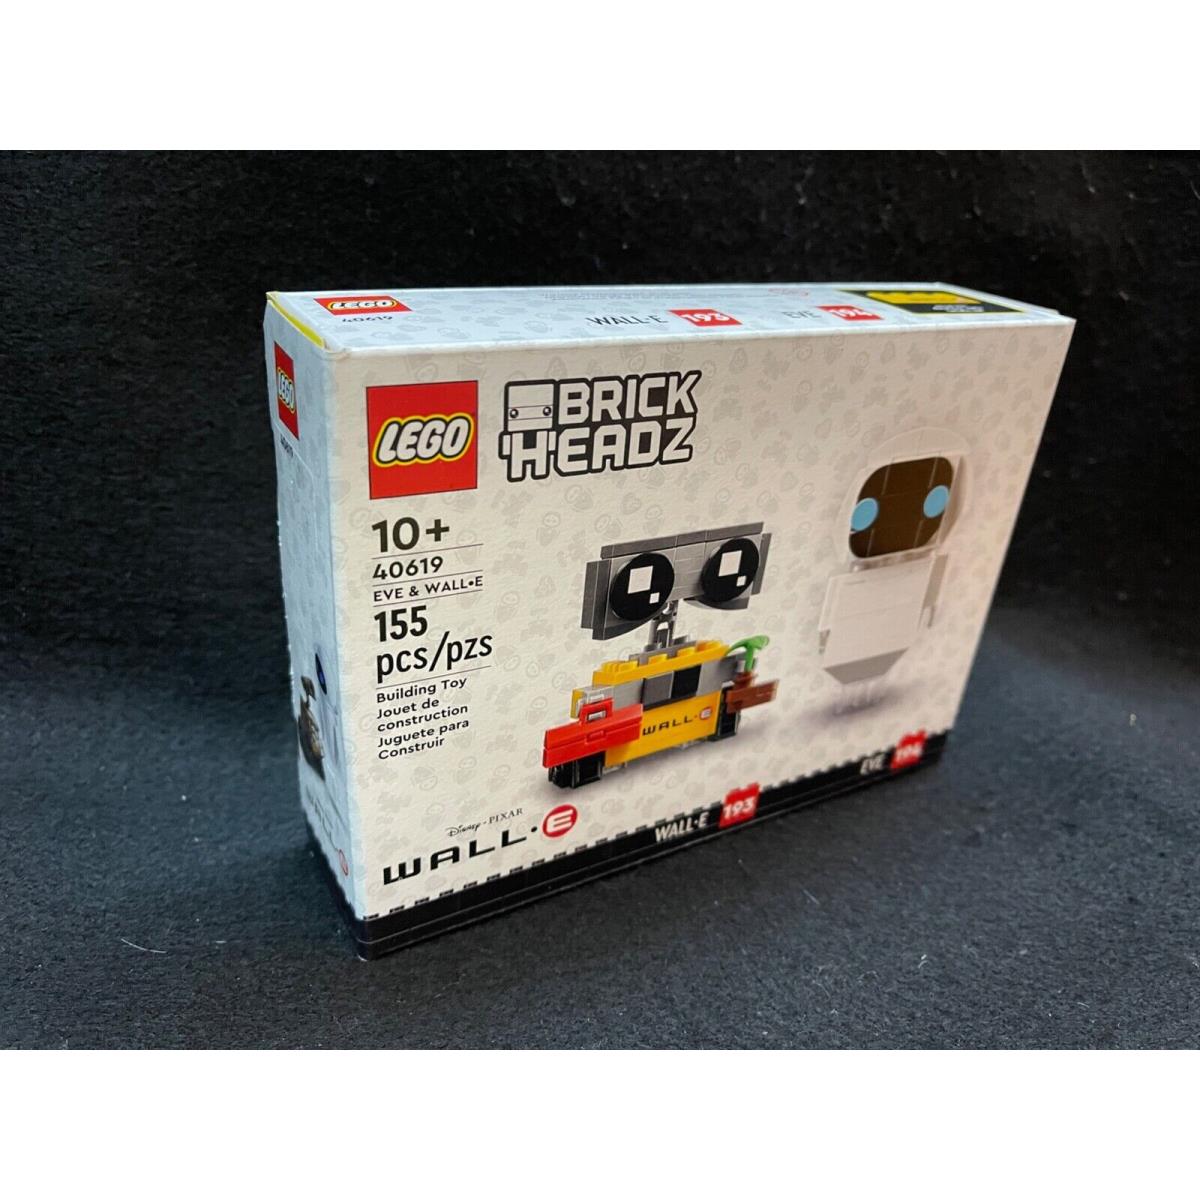 Lego toy 